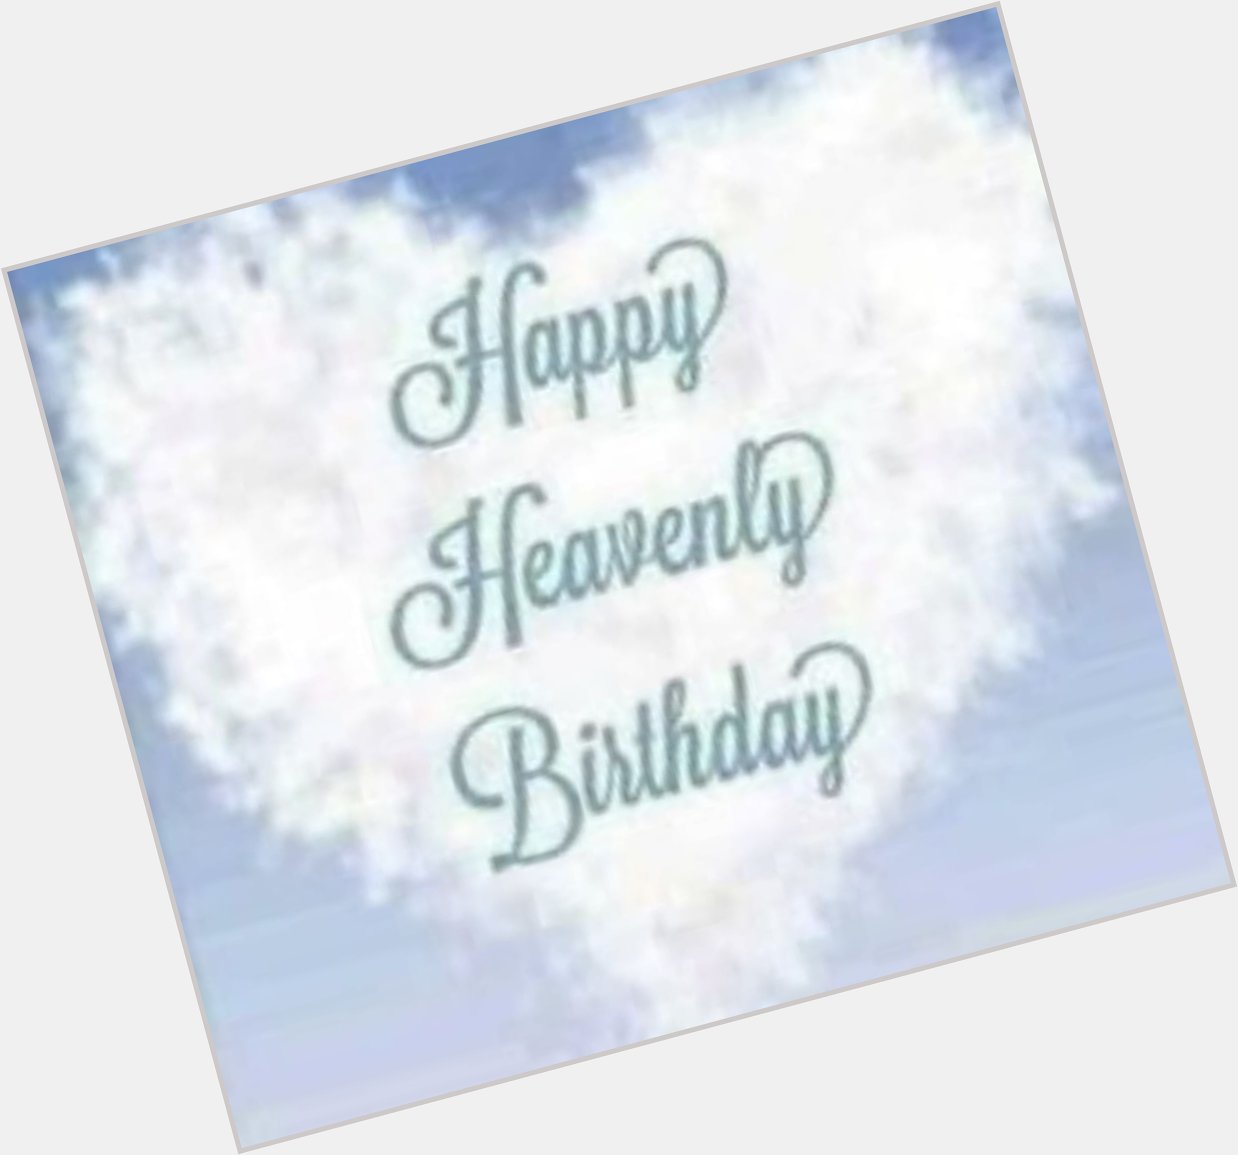  Happy  heavenly birthday to you Richard Kiel !   